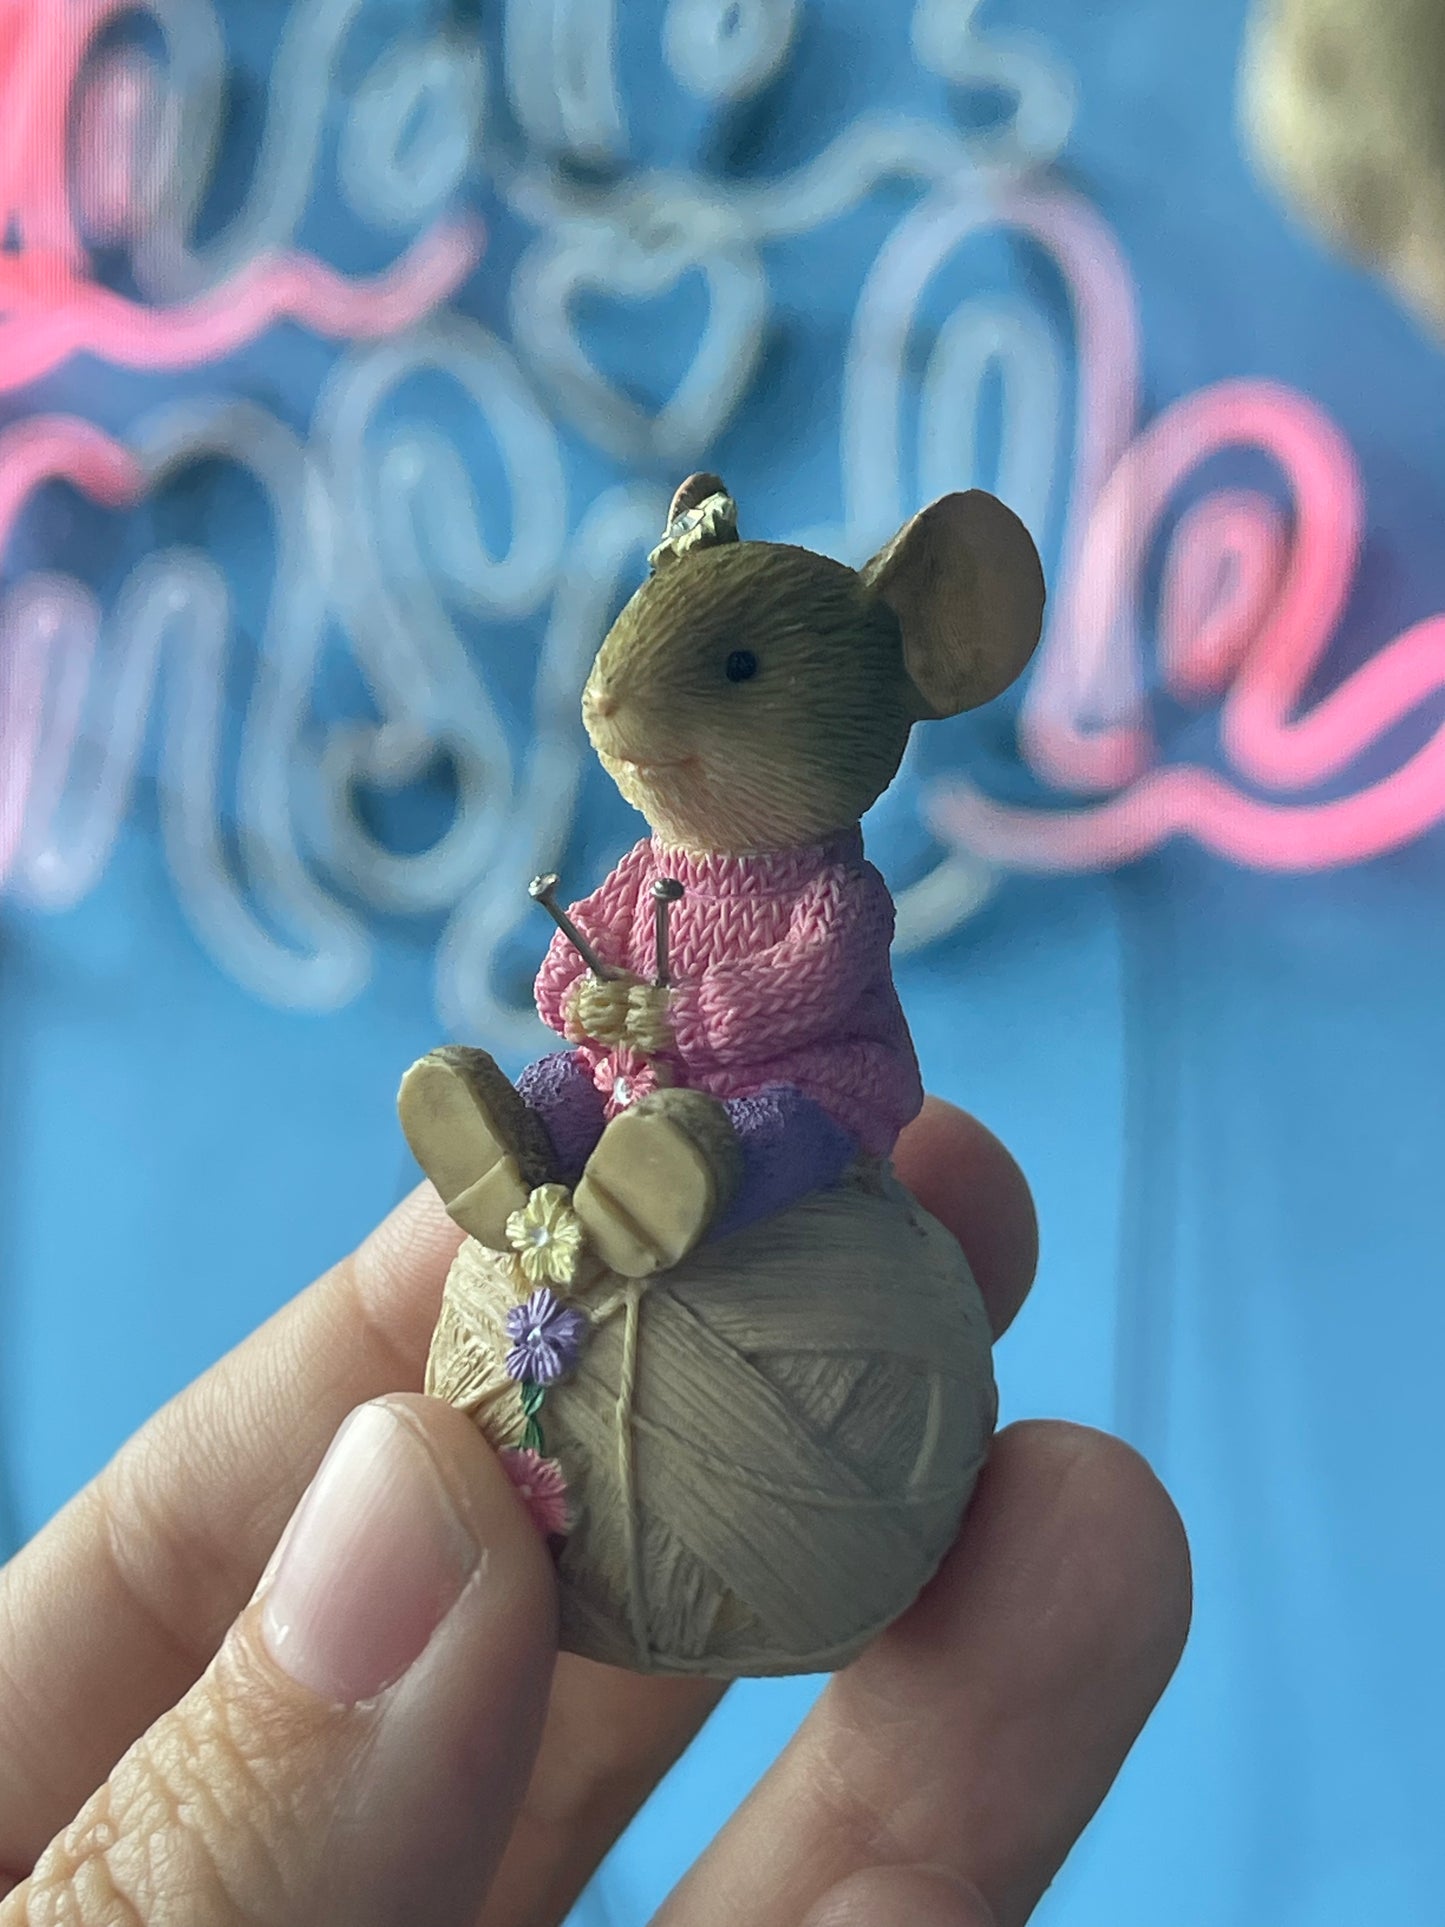 Knitting friend mouse figurine